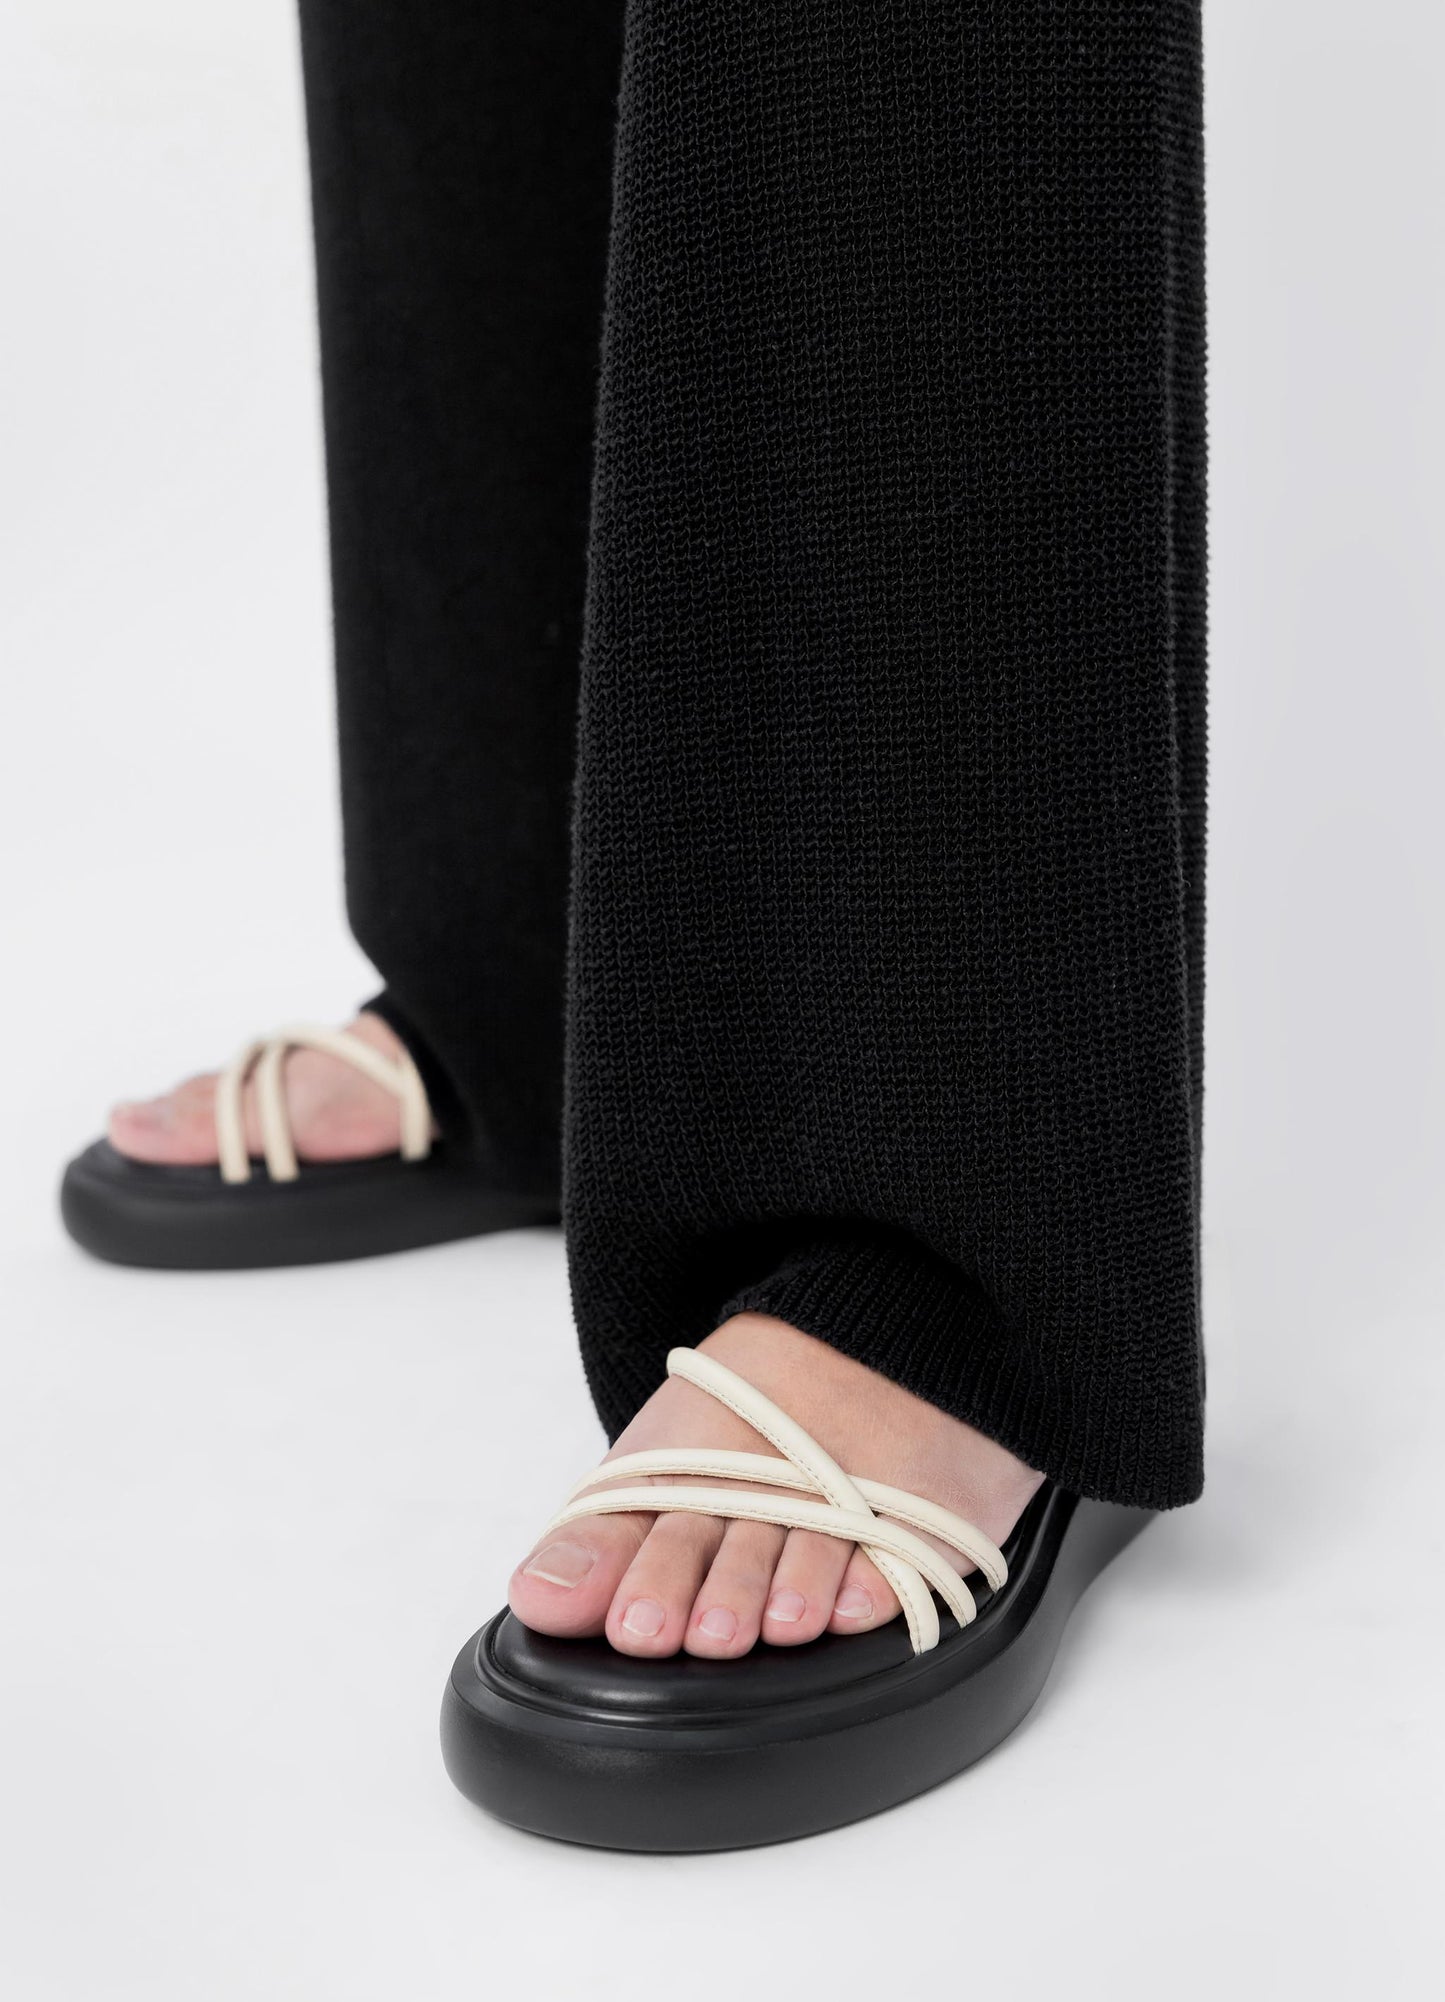 Blenda Sandals by Vagabond